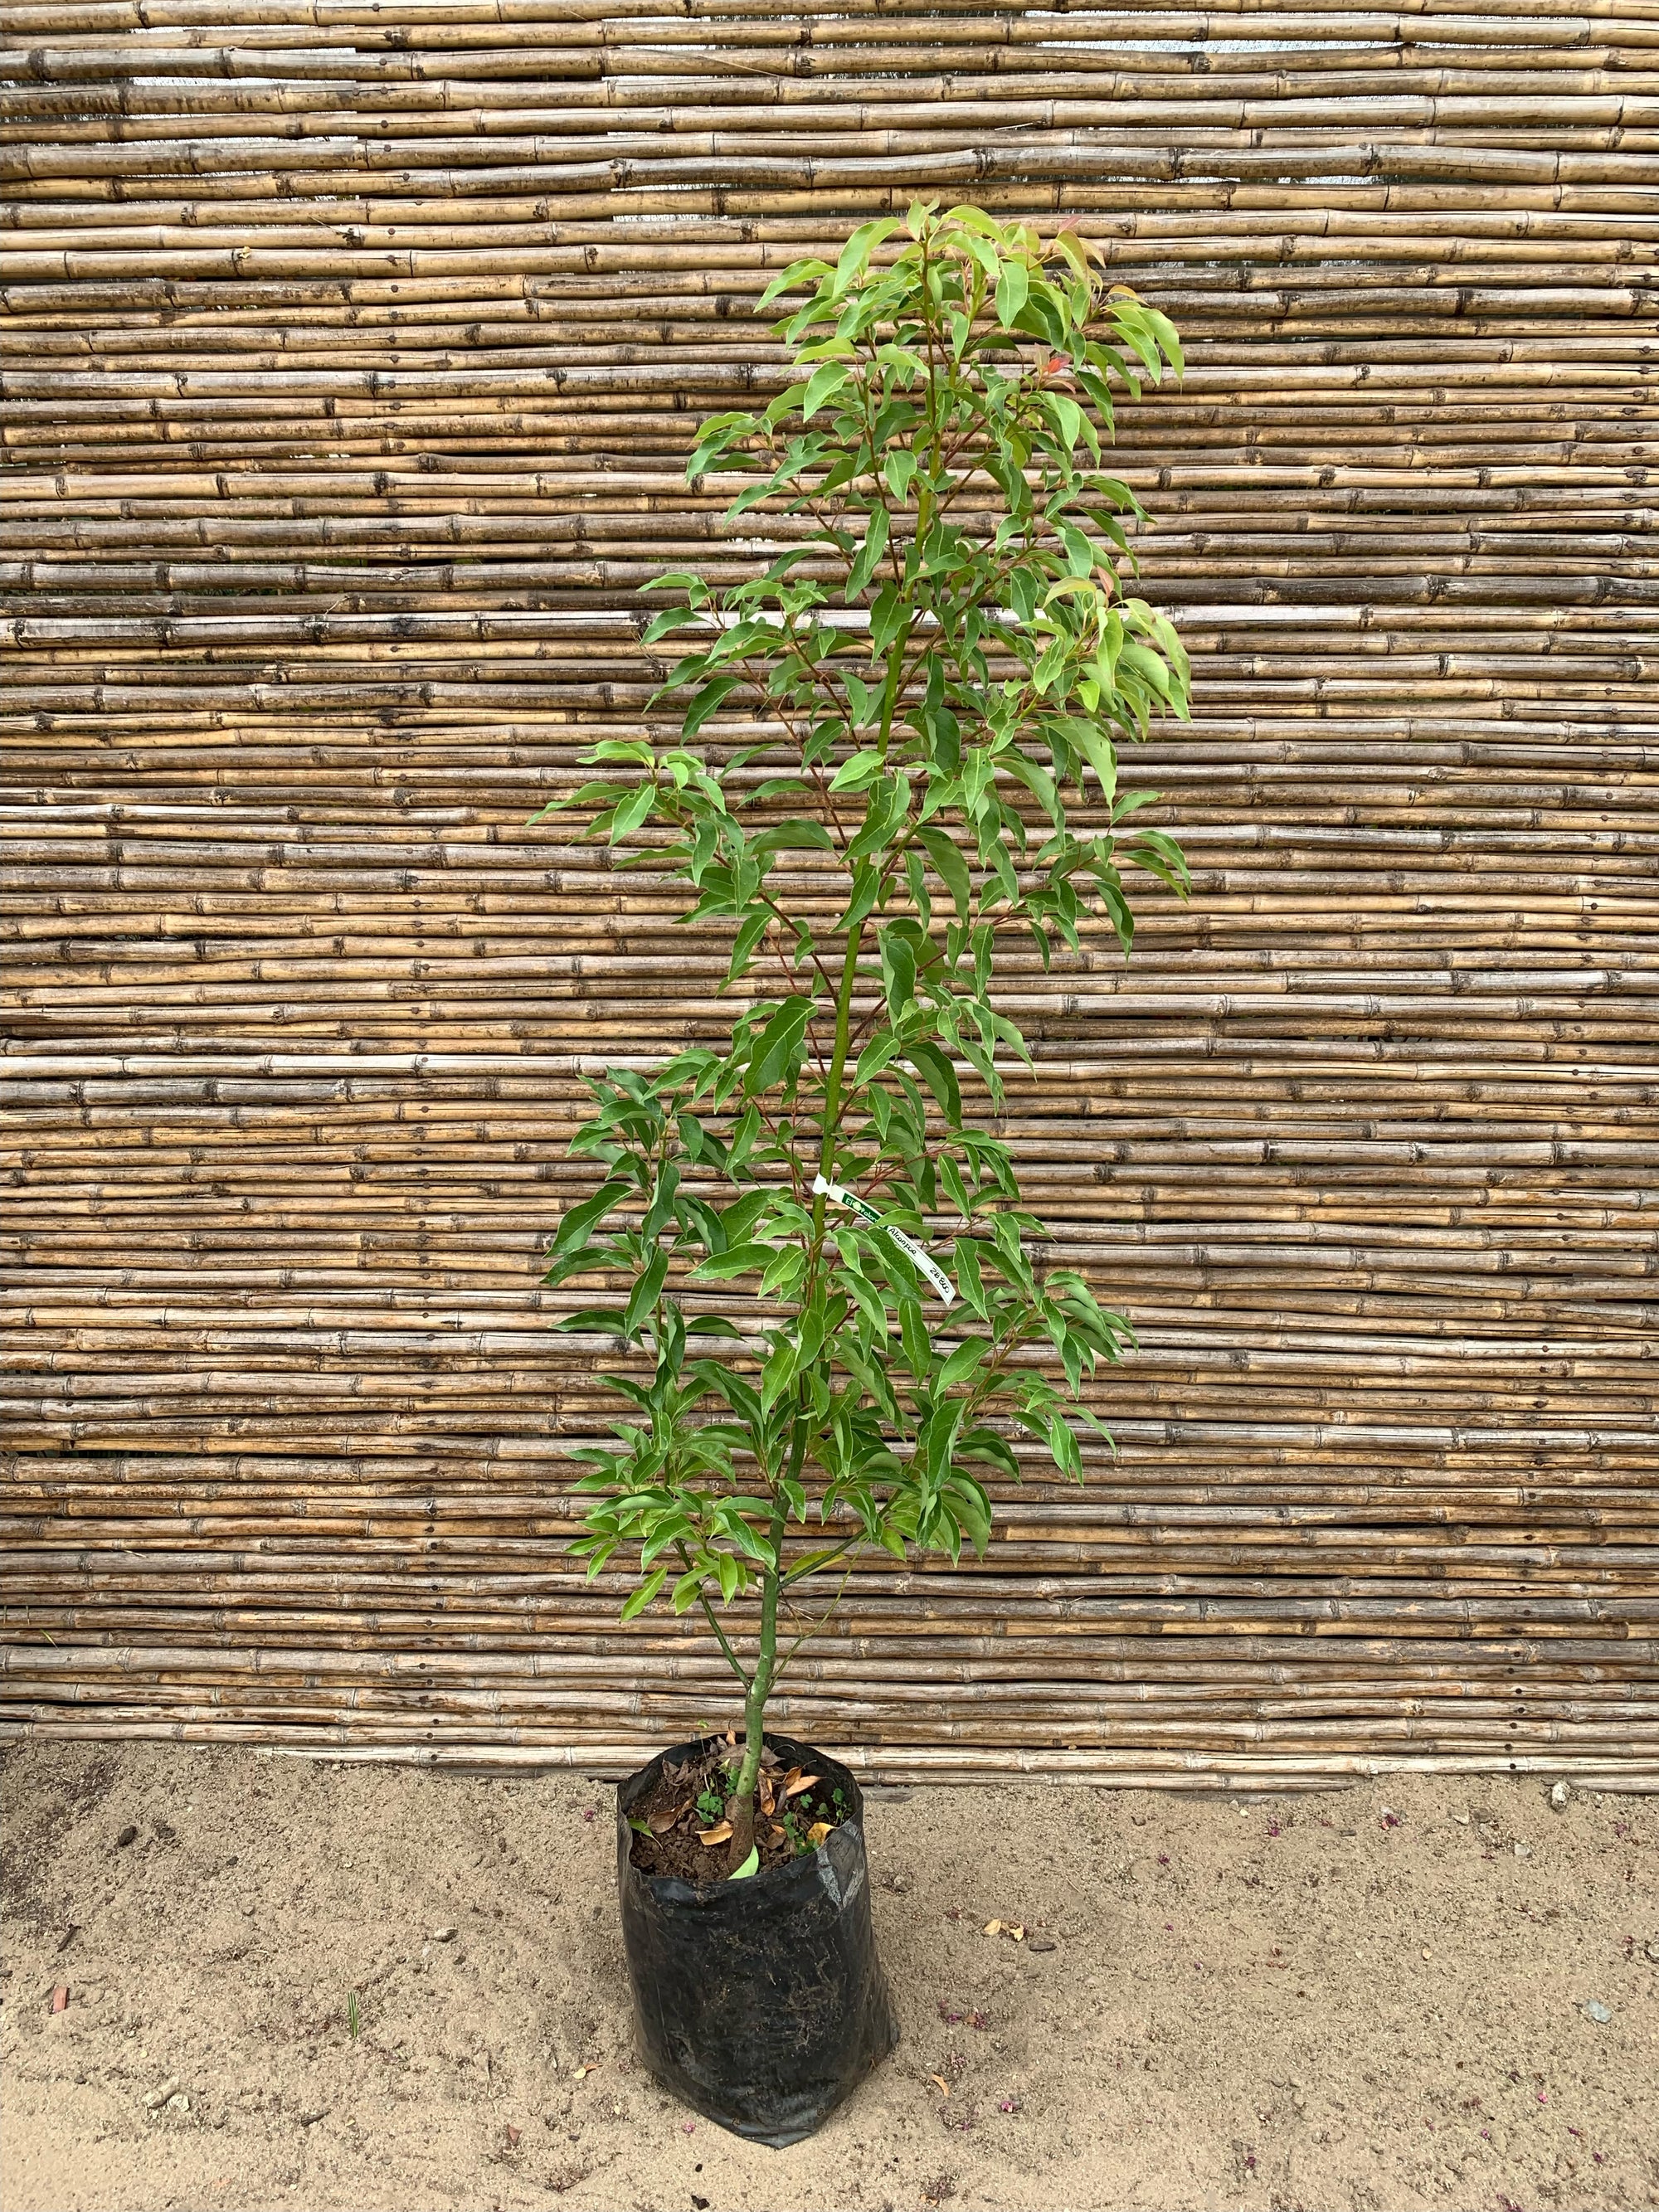 Alcanfor - Cinnamomum camphora (1.6m)